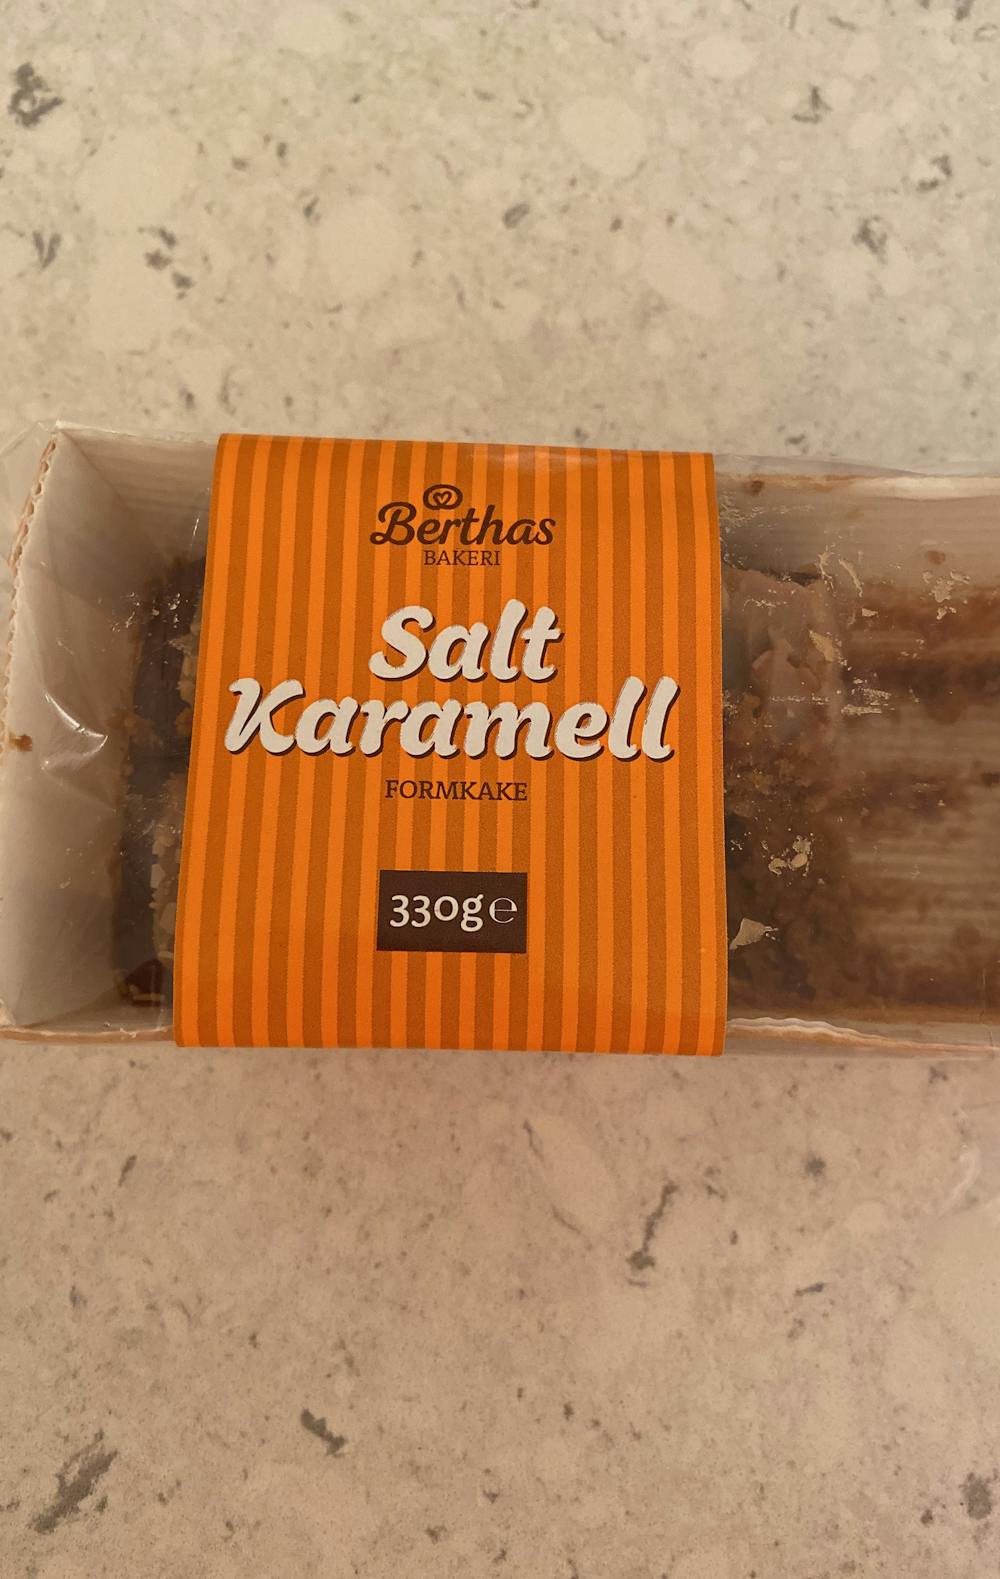 Salt karamell formkake, Berthas